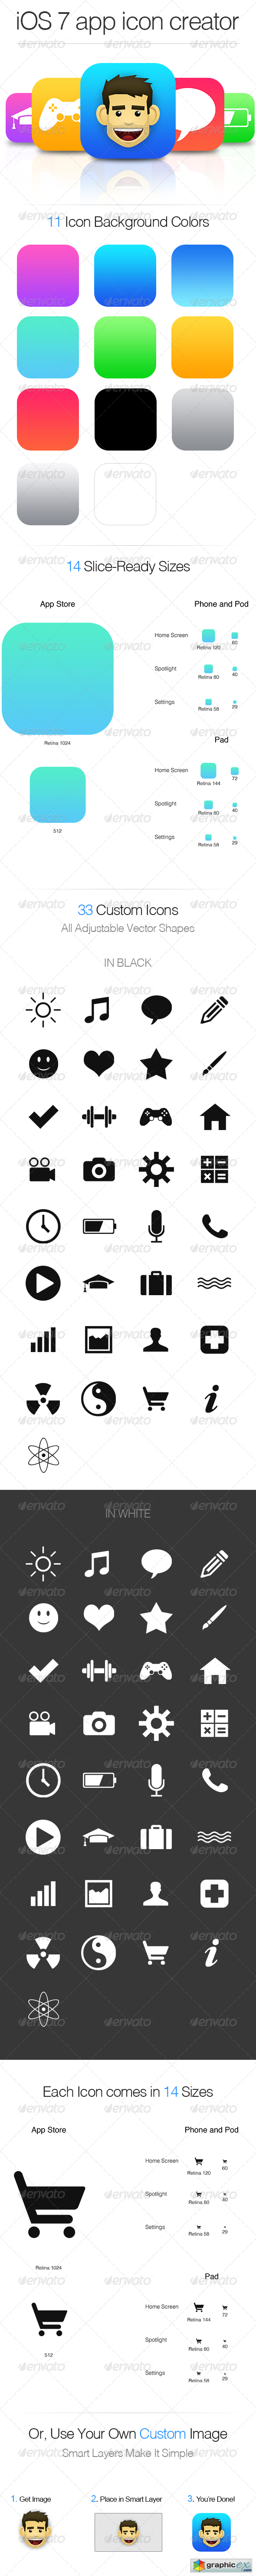 iOS 7 App Icon Creator